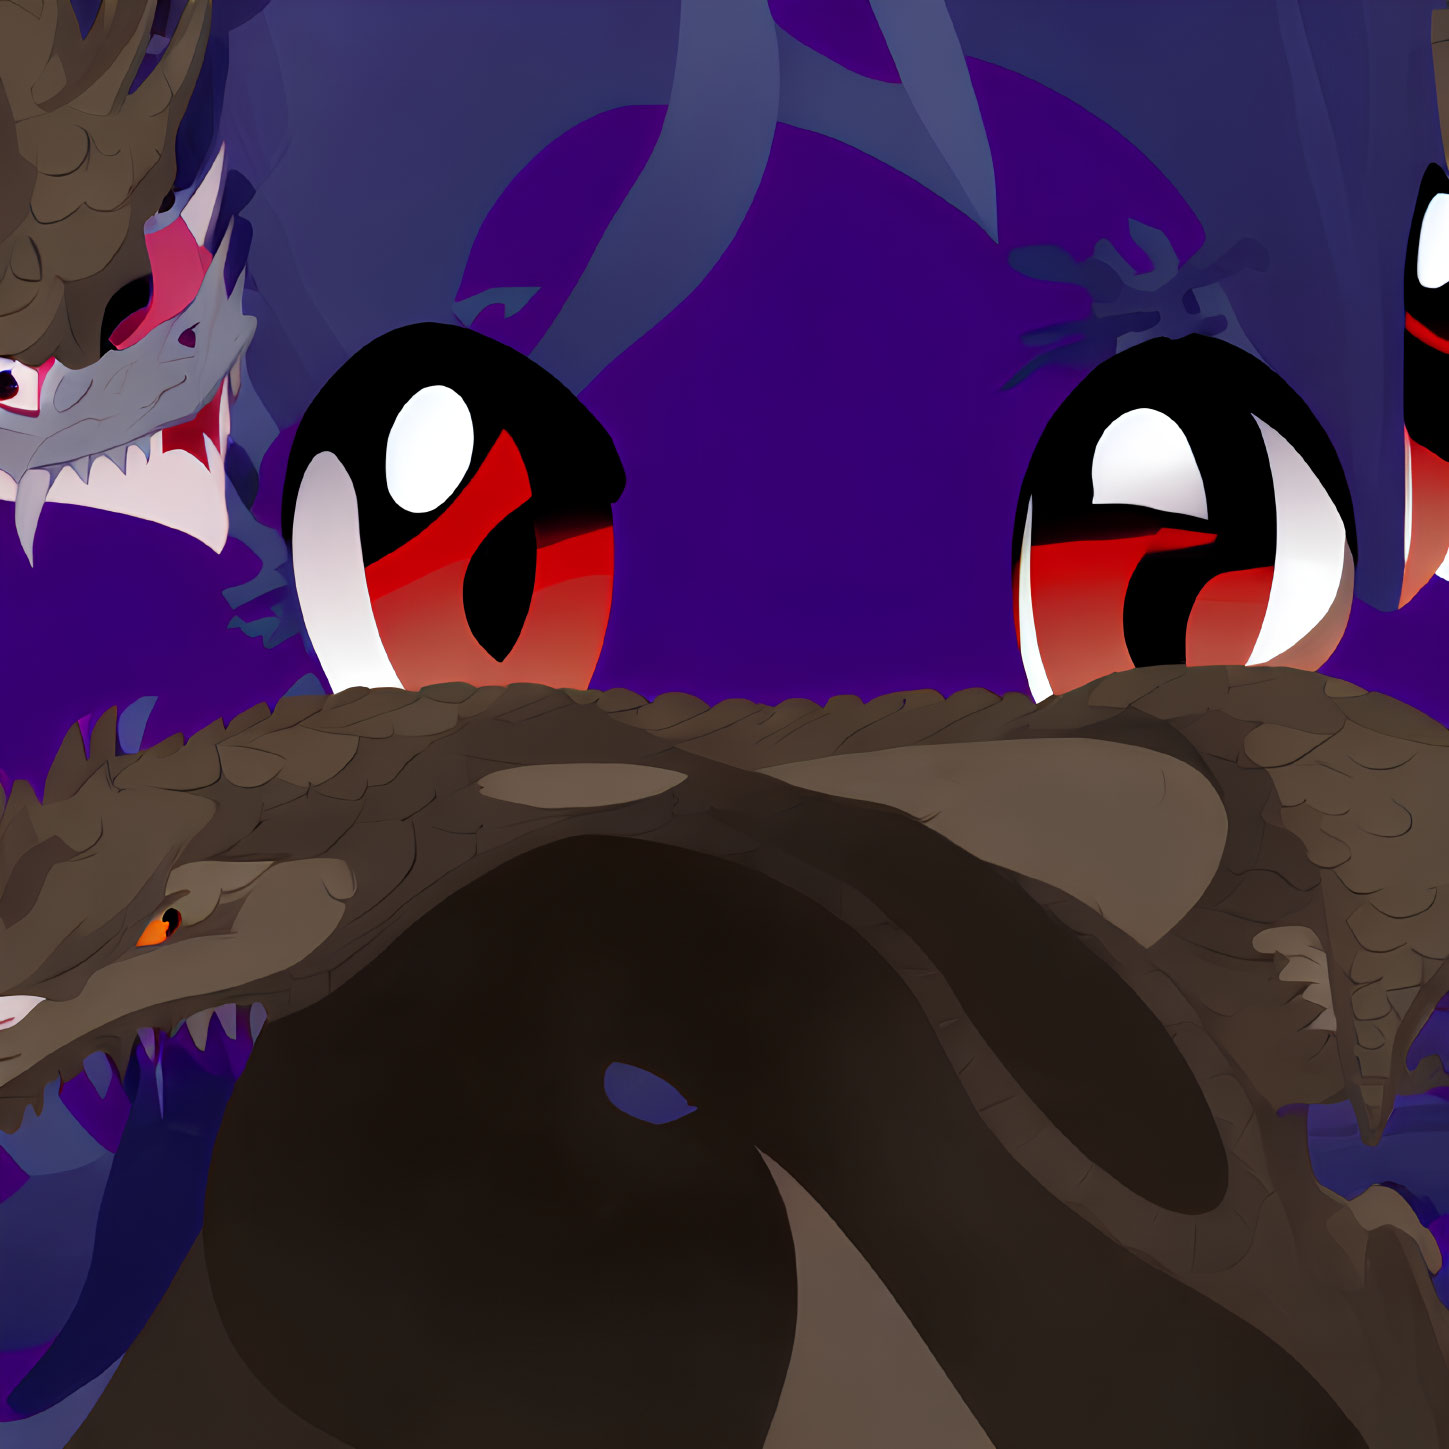 Three menacing cartoon dragons with glowing red eyes and sharp teeth in a dark setting.